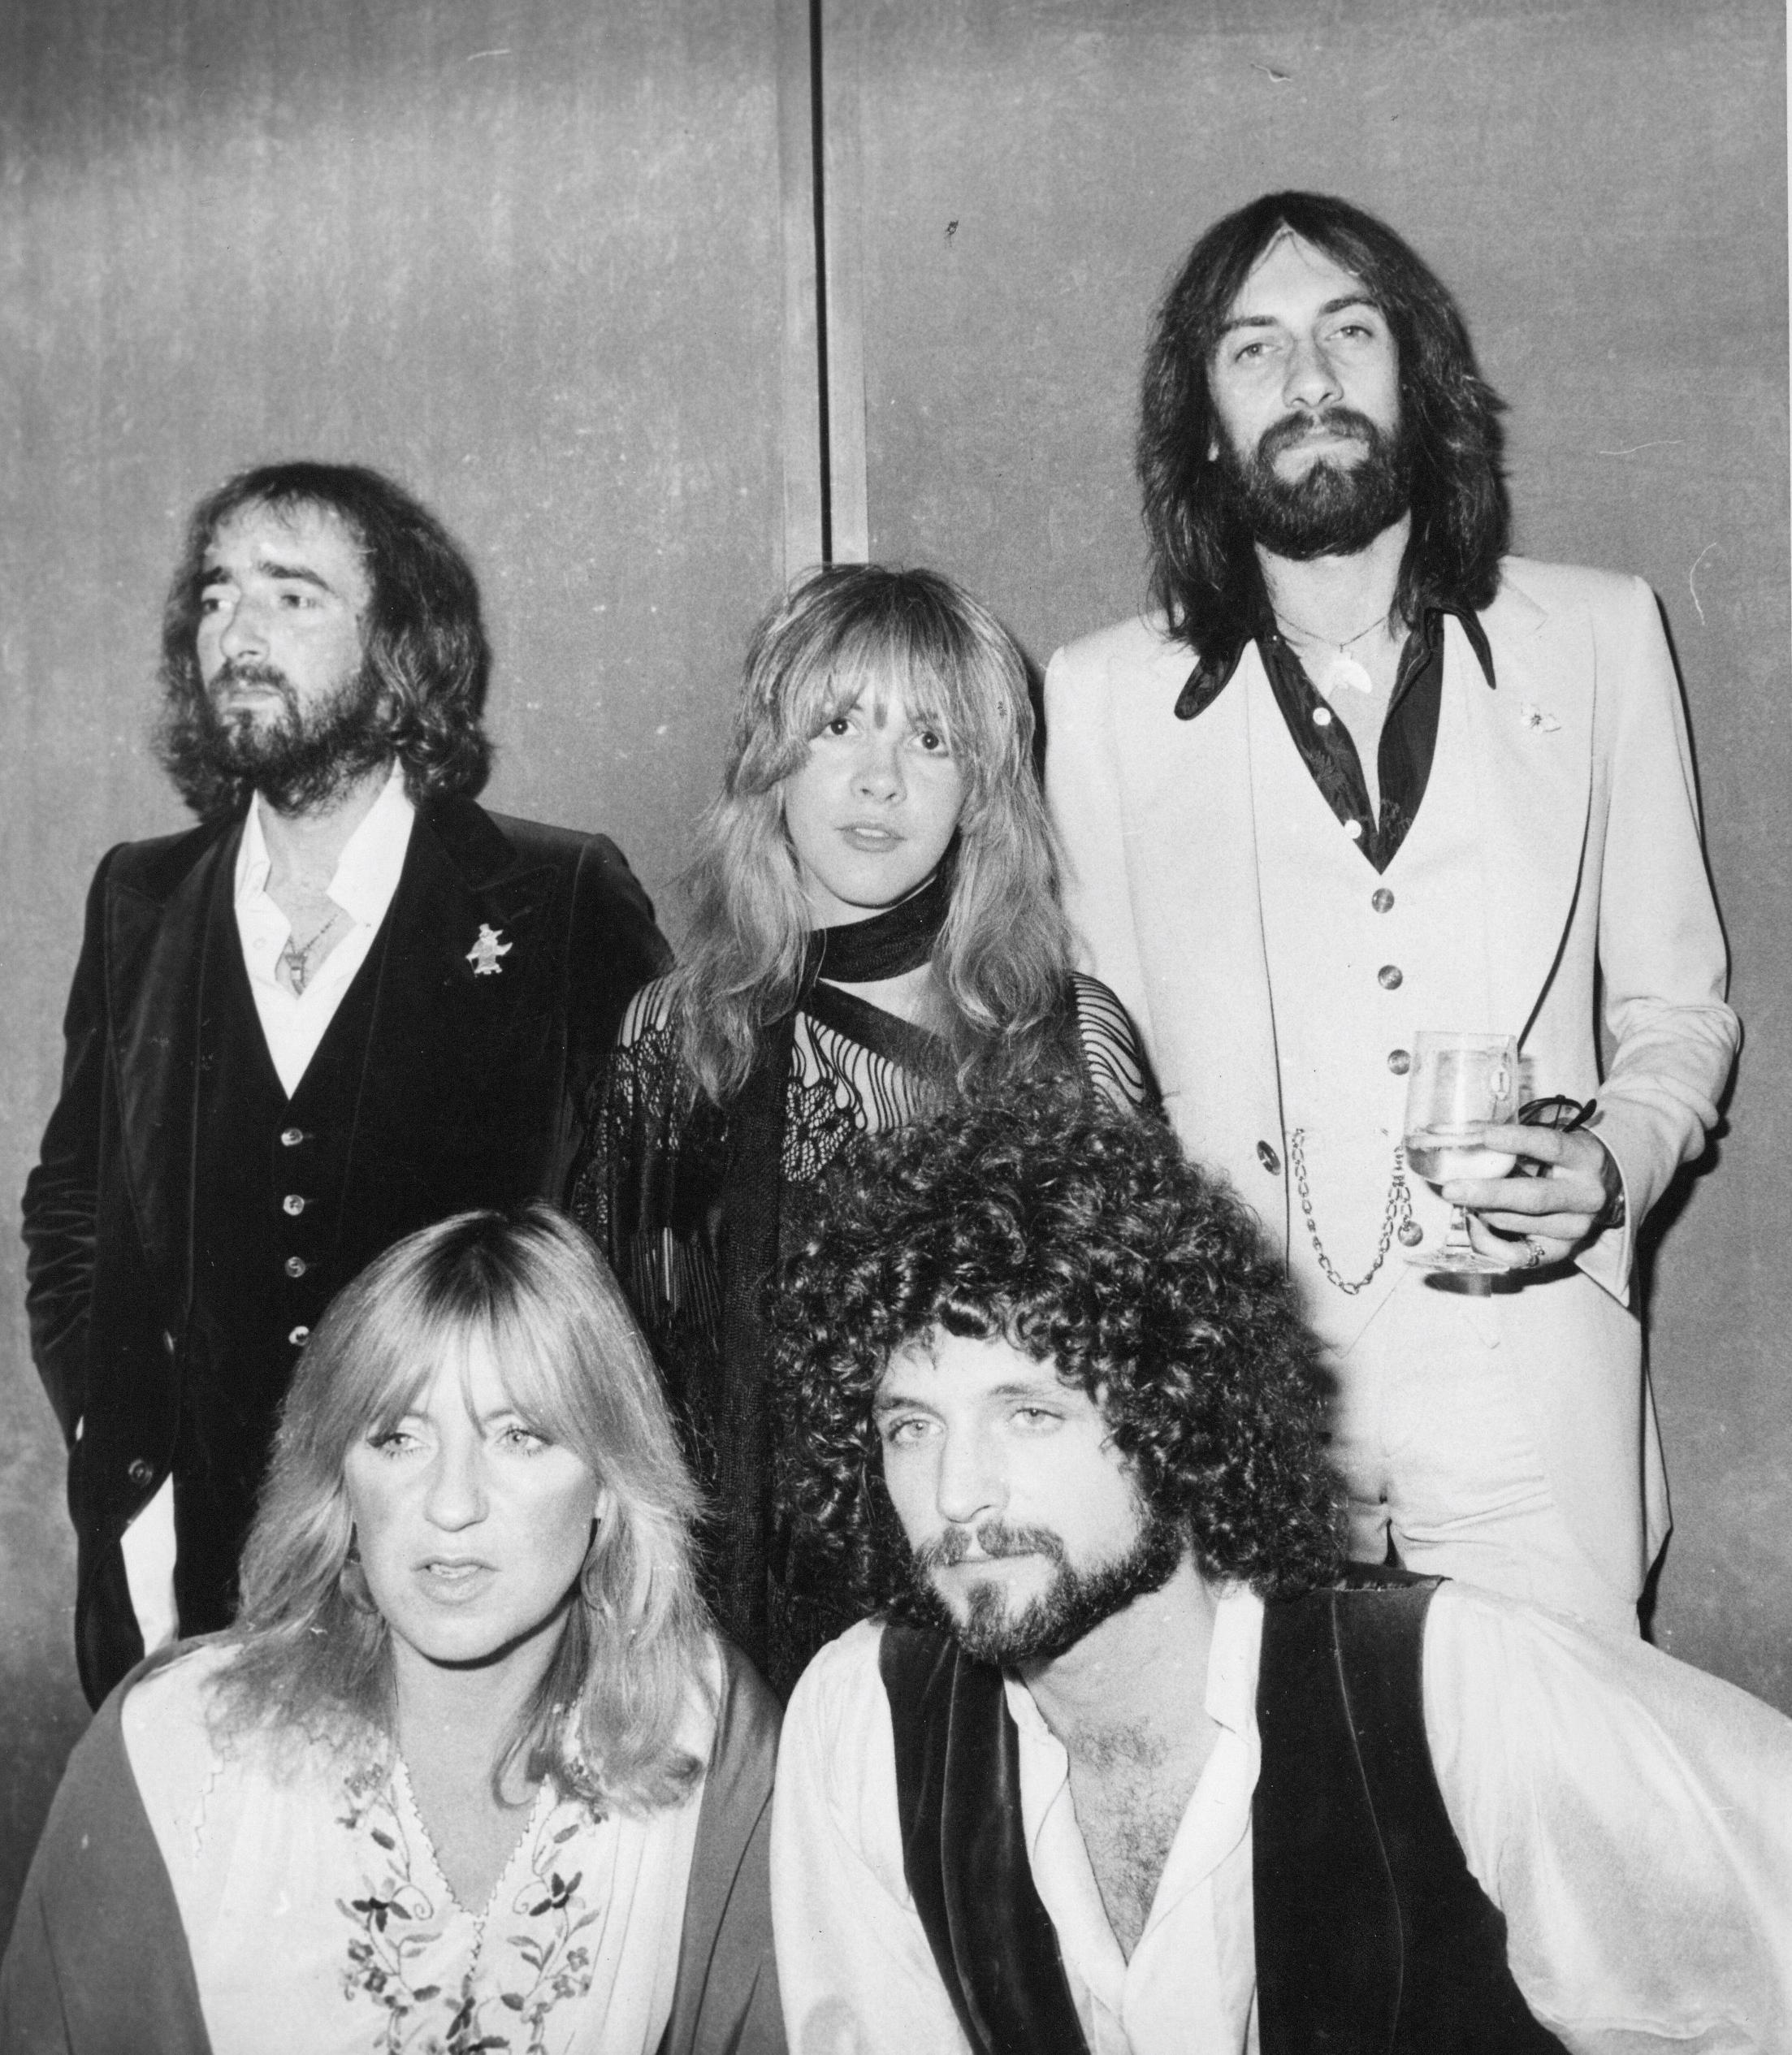 Chris Walter Black and White Photograph - Fleetwood Mac Candid Group Portrait Vintage Original Photograph